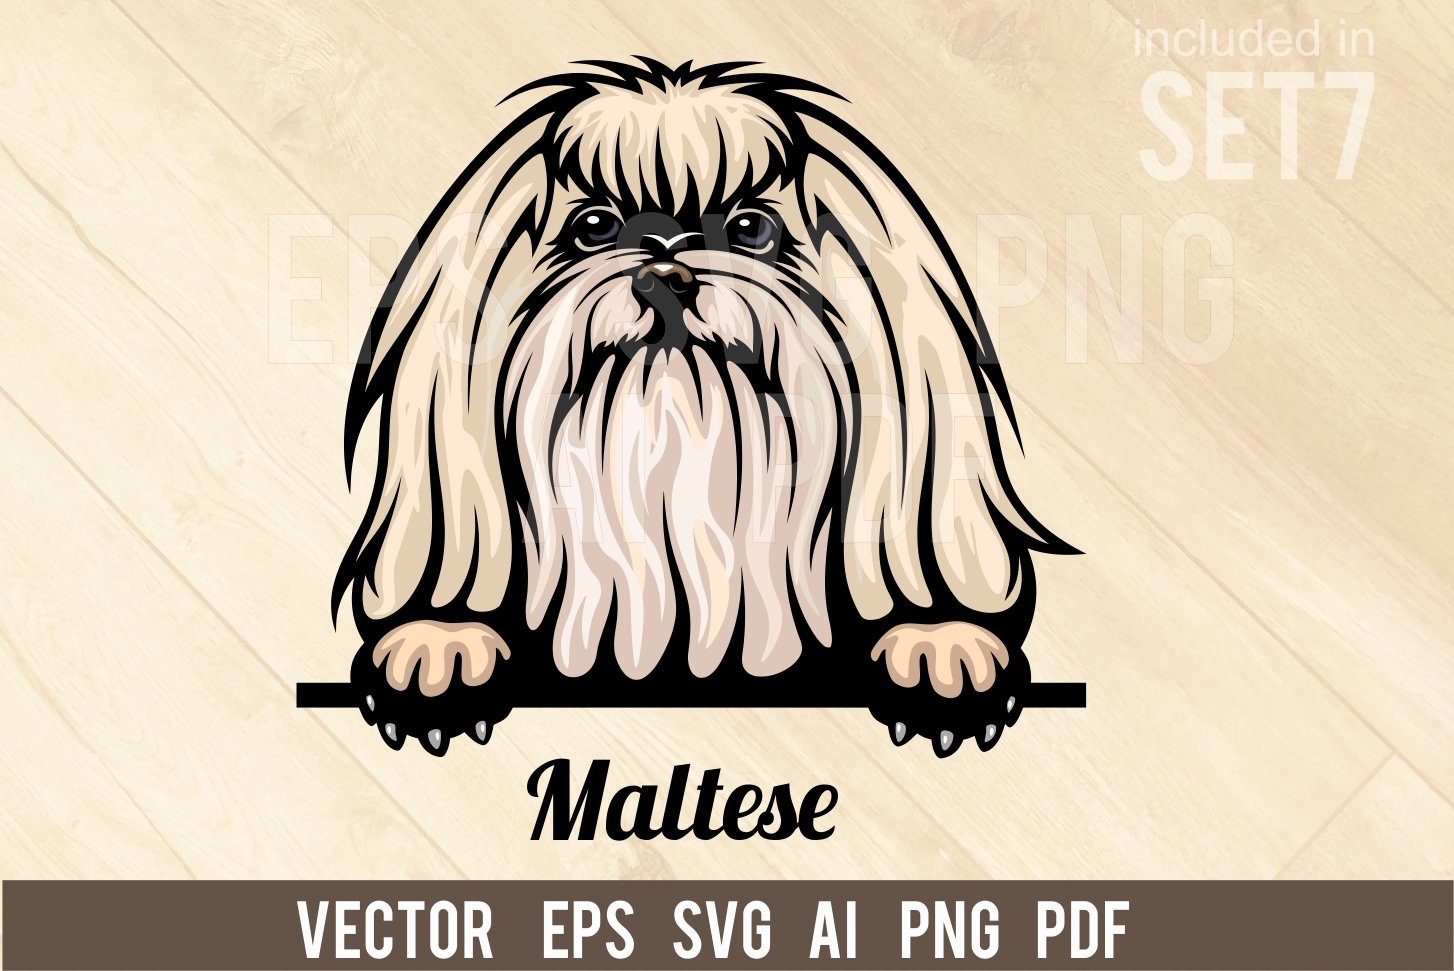 Maltese - Peeking Dog Color SVG cover image.